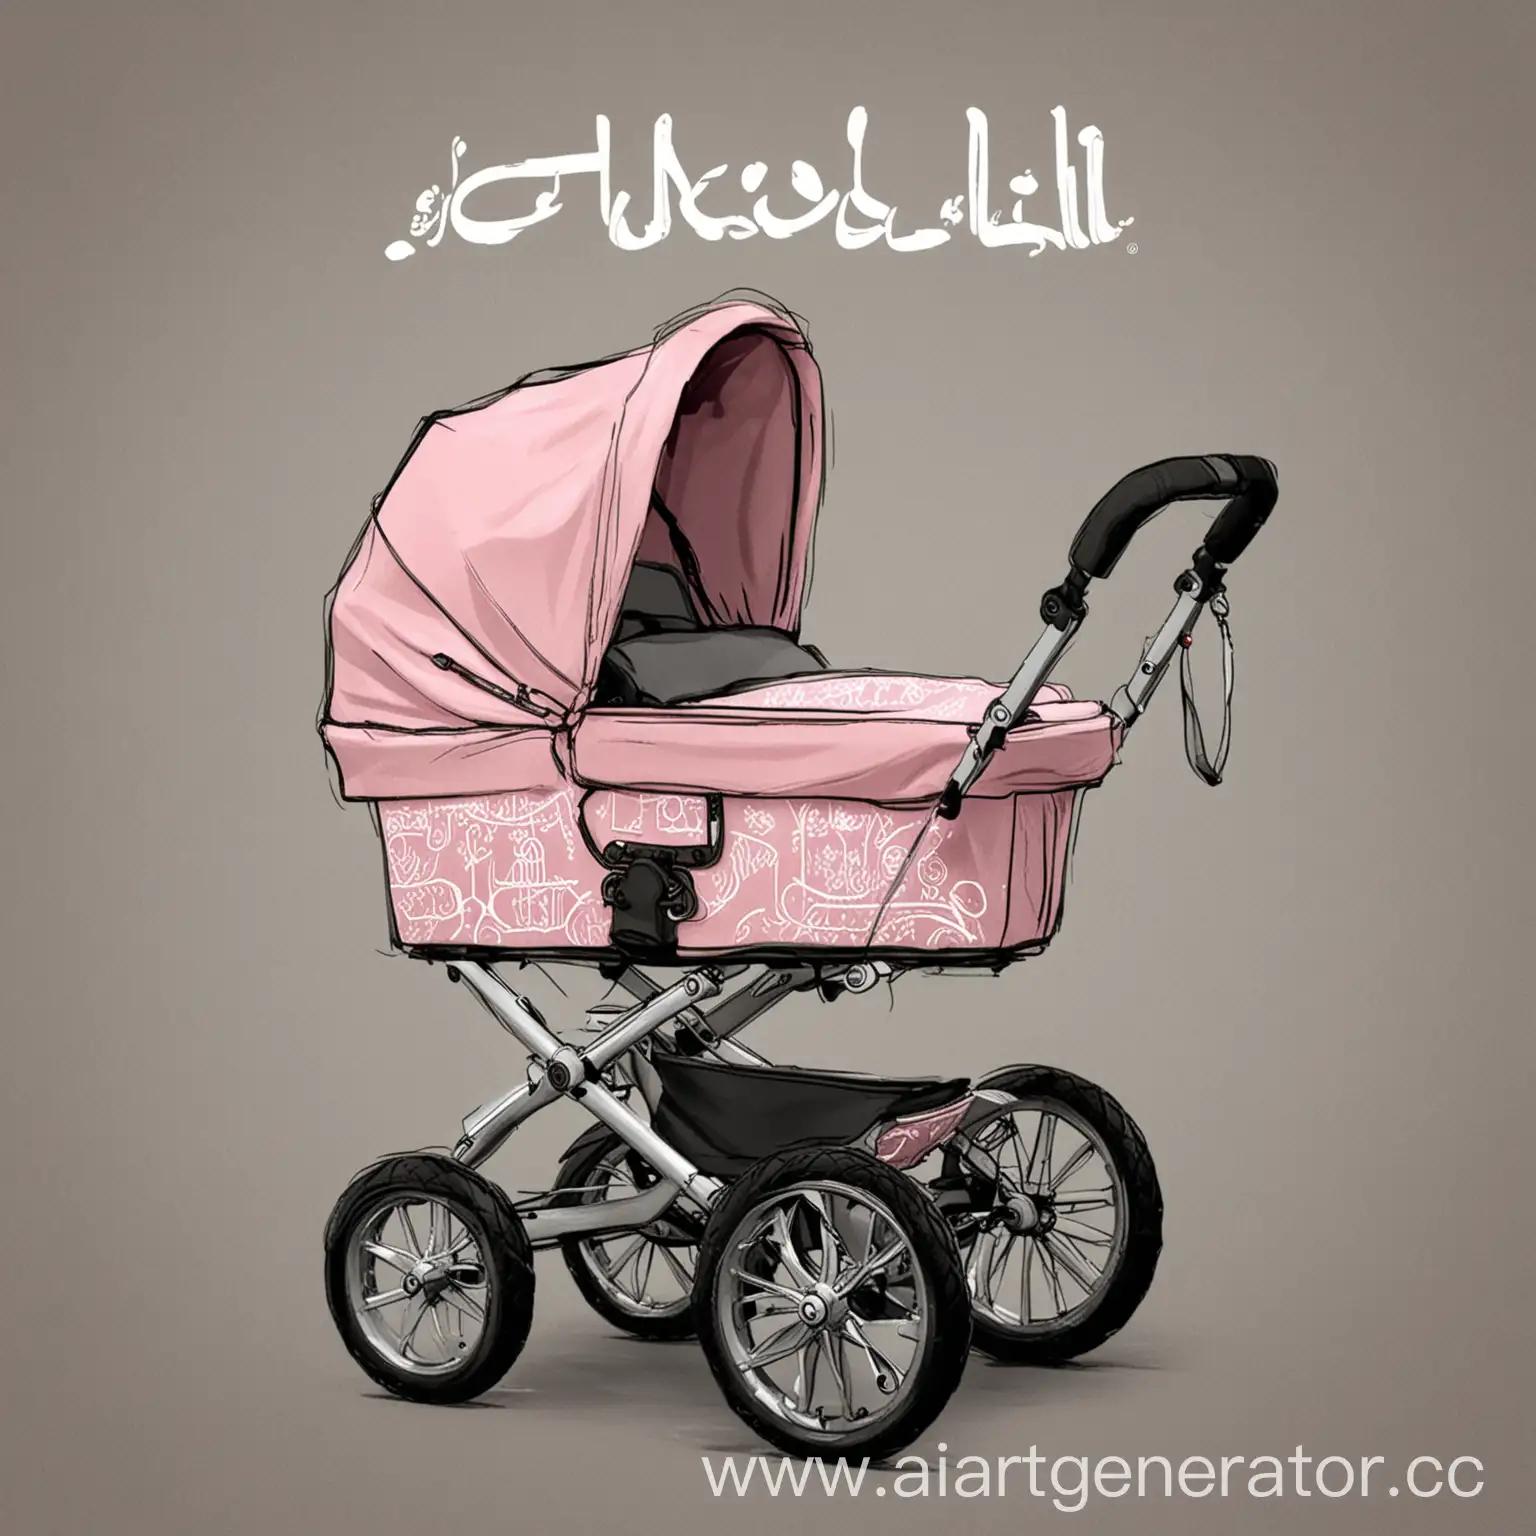 Innovative-Halal-Stroller-Design-for-Children-Ethical-and-Practical-Mobility-Solution